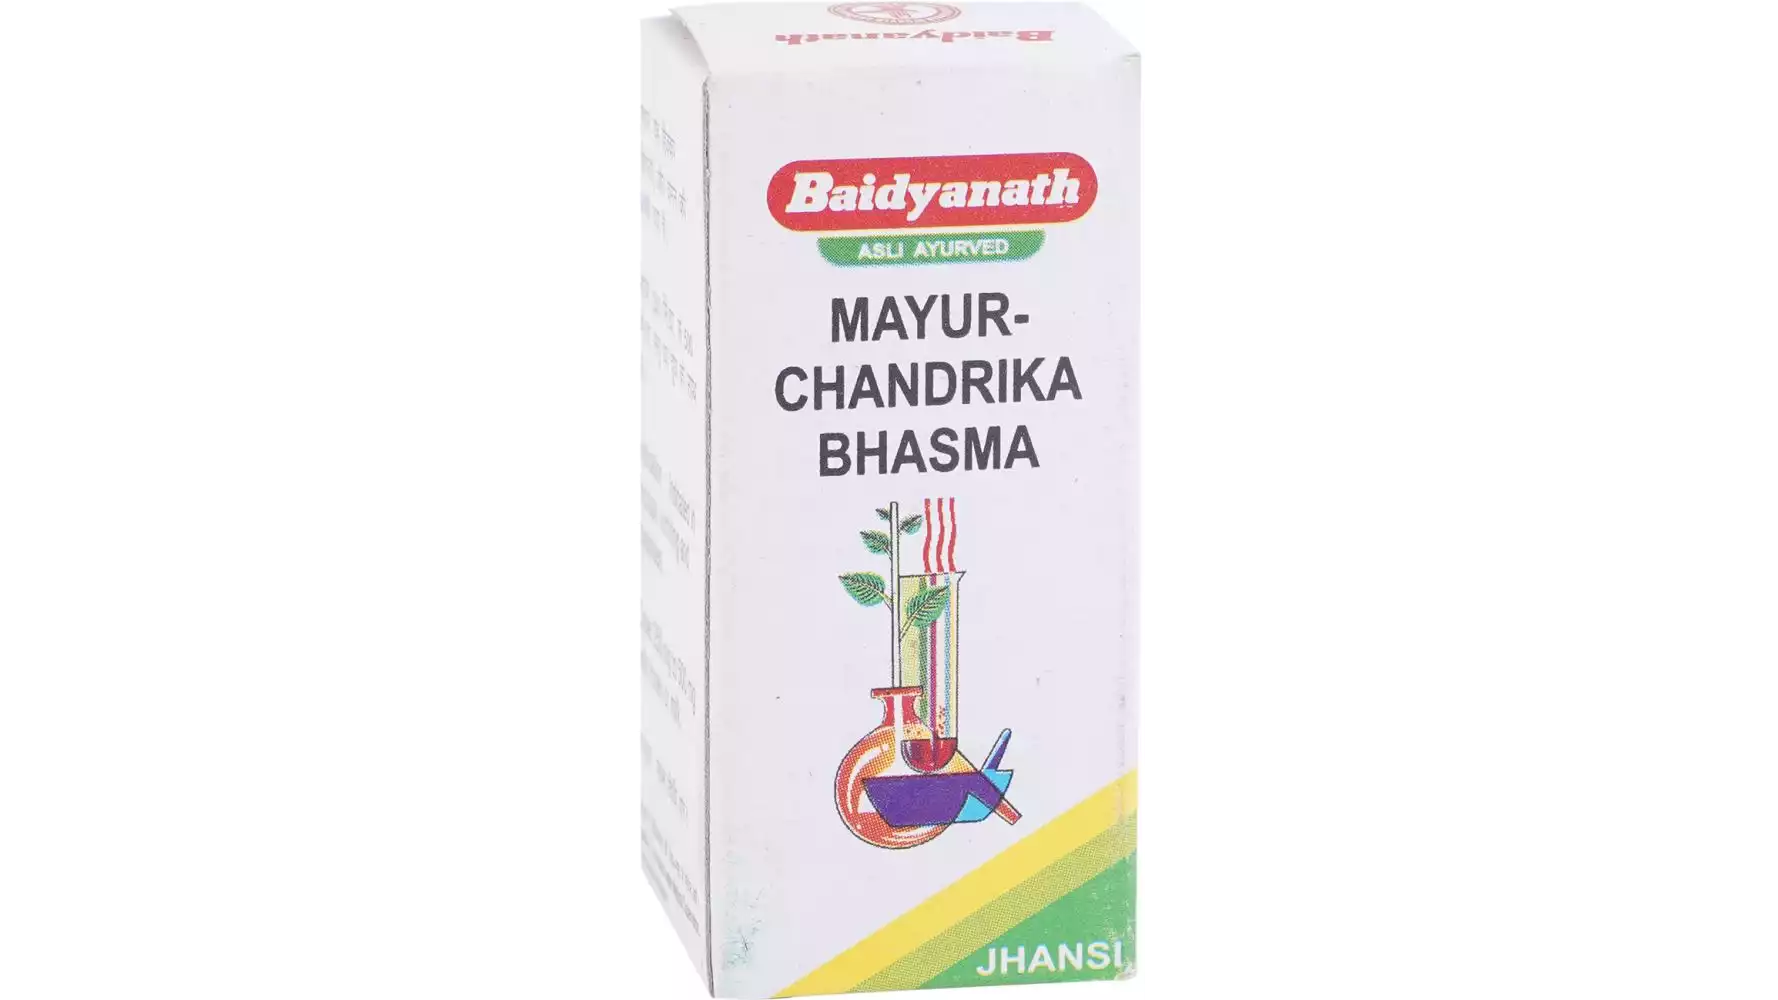 Baidyanath Mayur Chandrika Bhasma (5g)